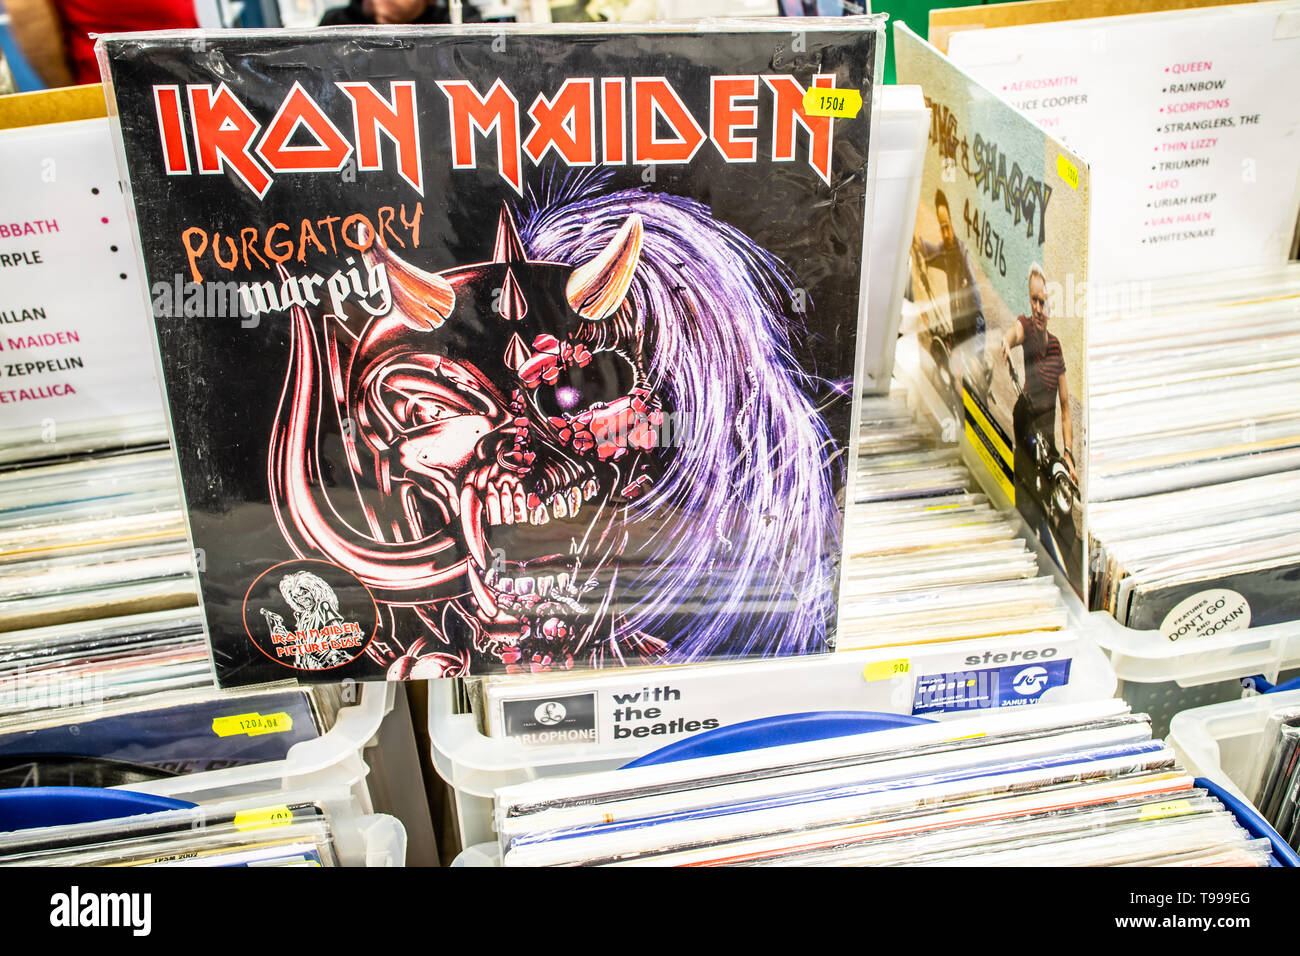 WIZZ - Crazy Games Swedish Heavy Metal 12 LP Vinyl Album Gallery  #vinylrecords